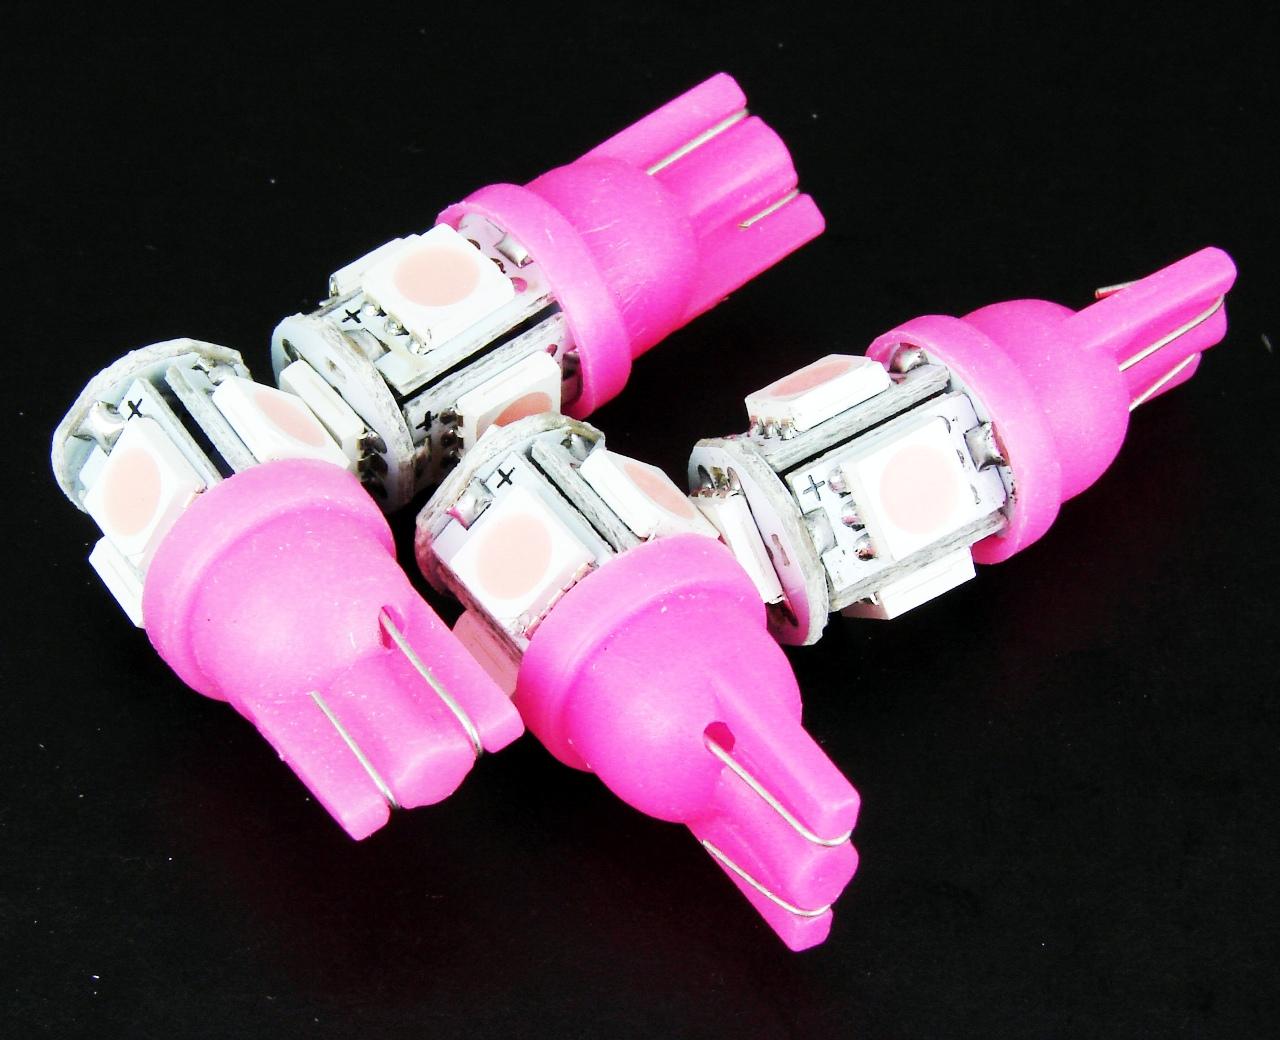   _5 LED purple and pink T10 W5W Car Light Bulbs